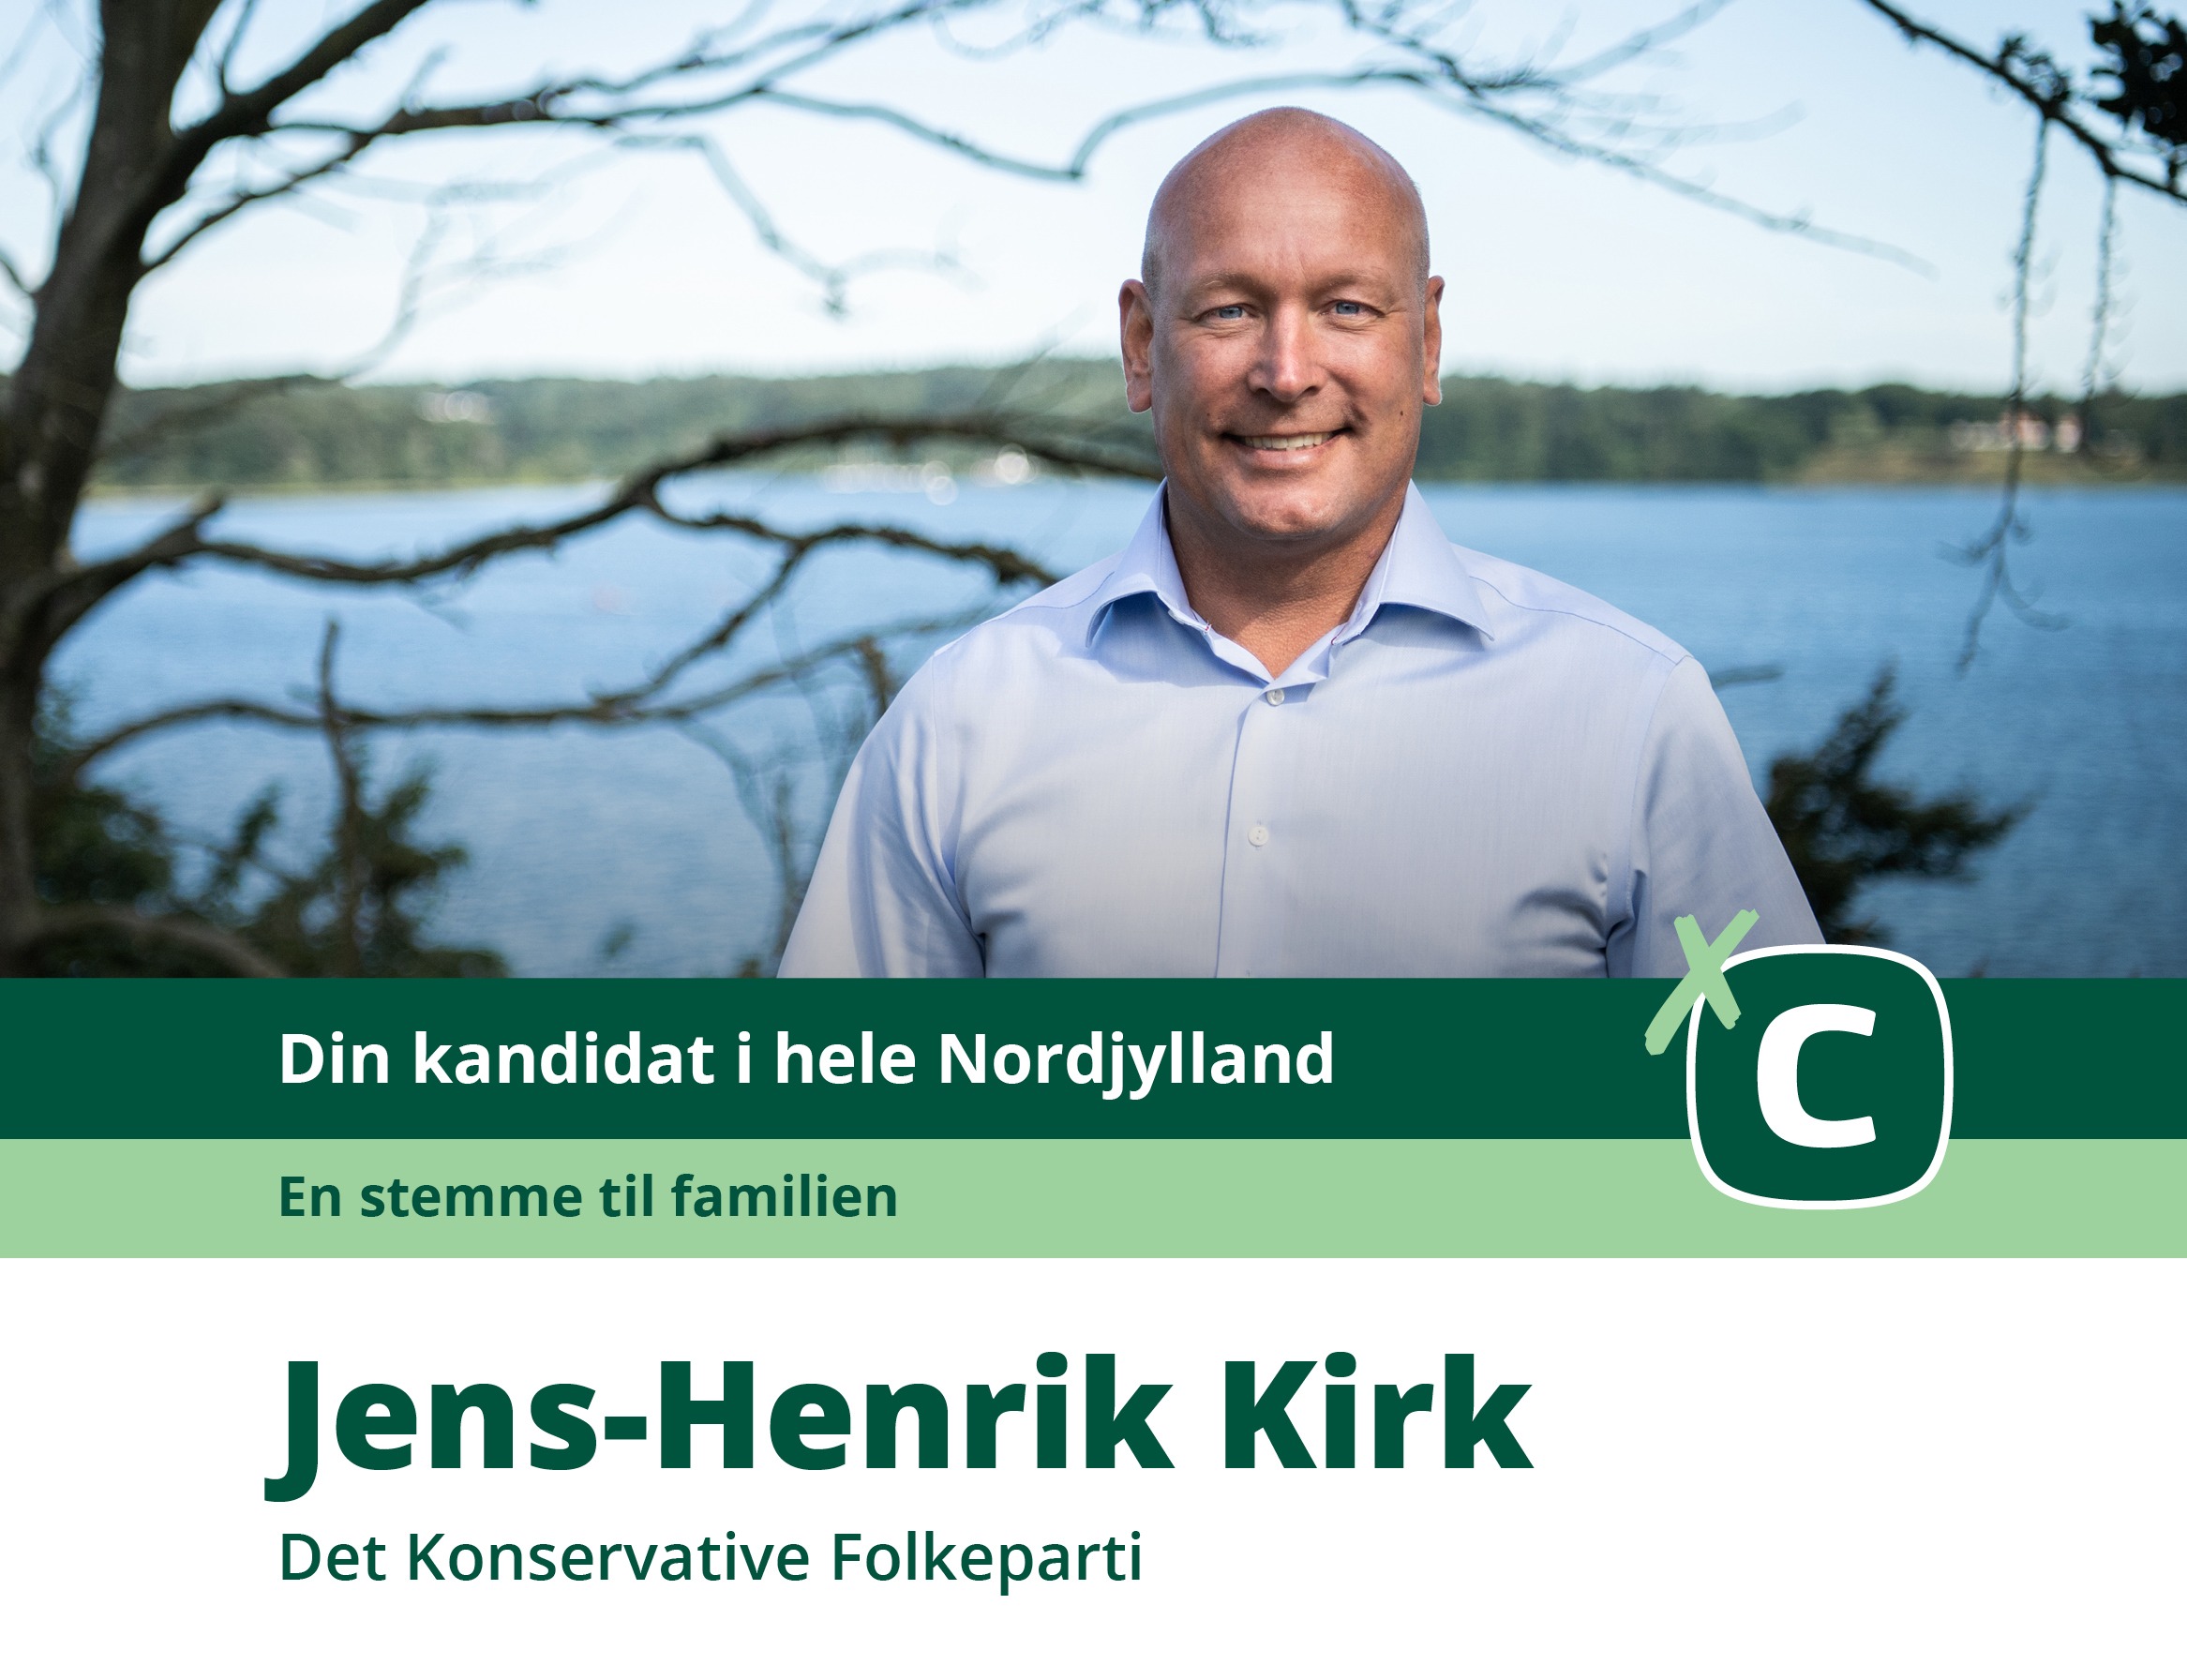 Jens-Henrik Kirk